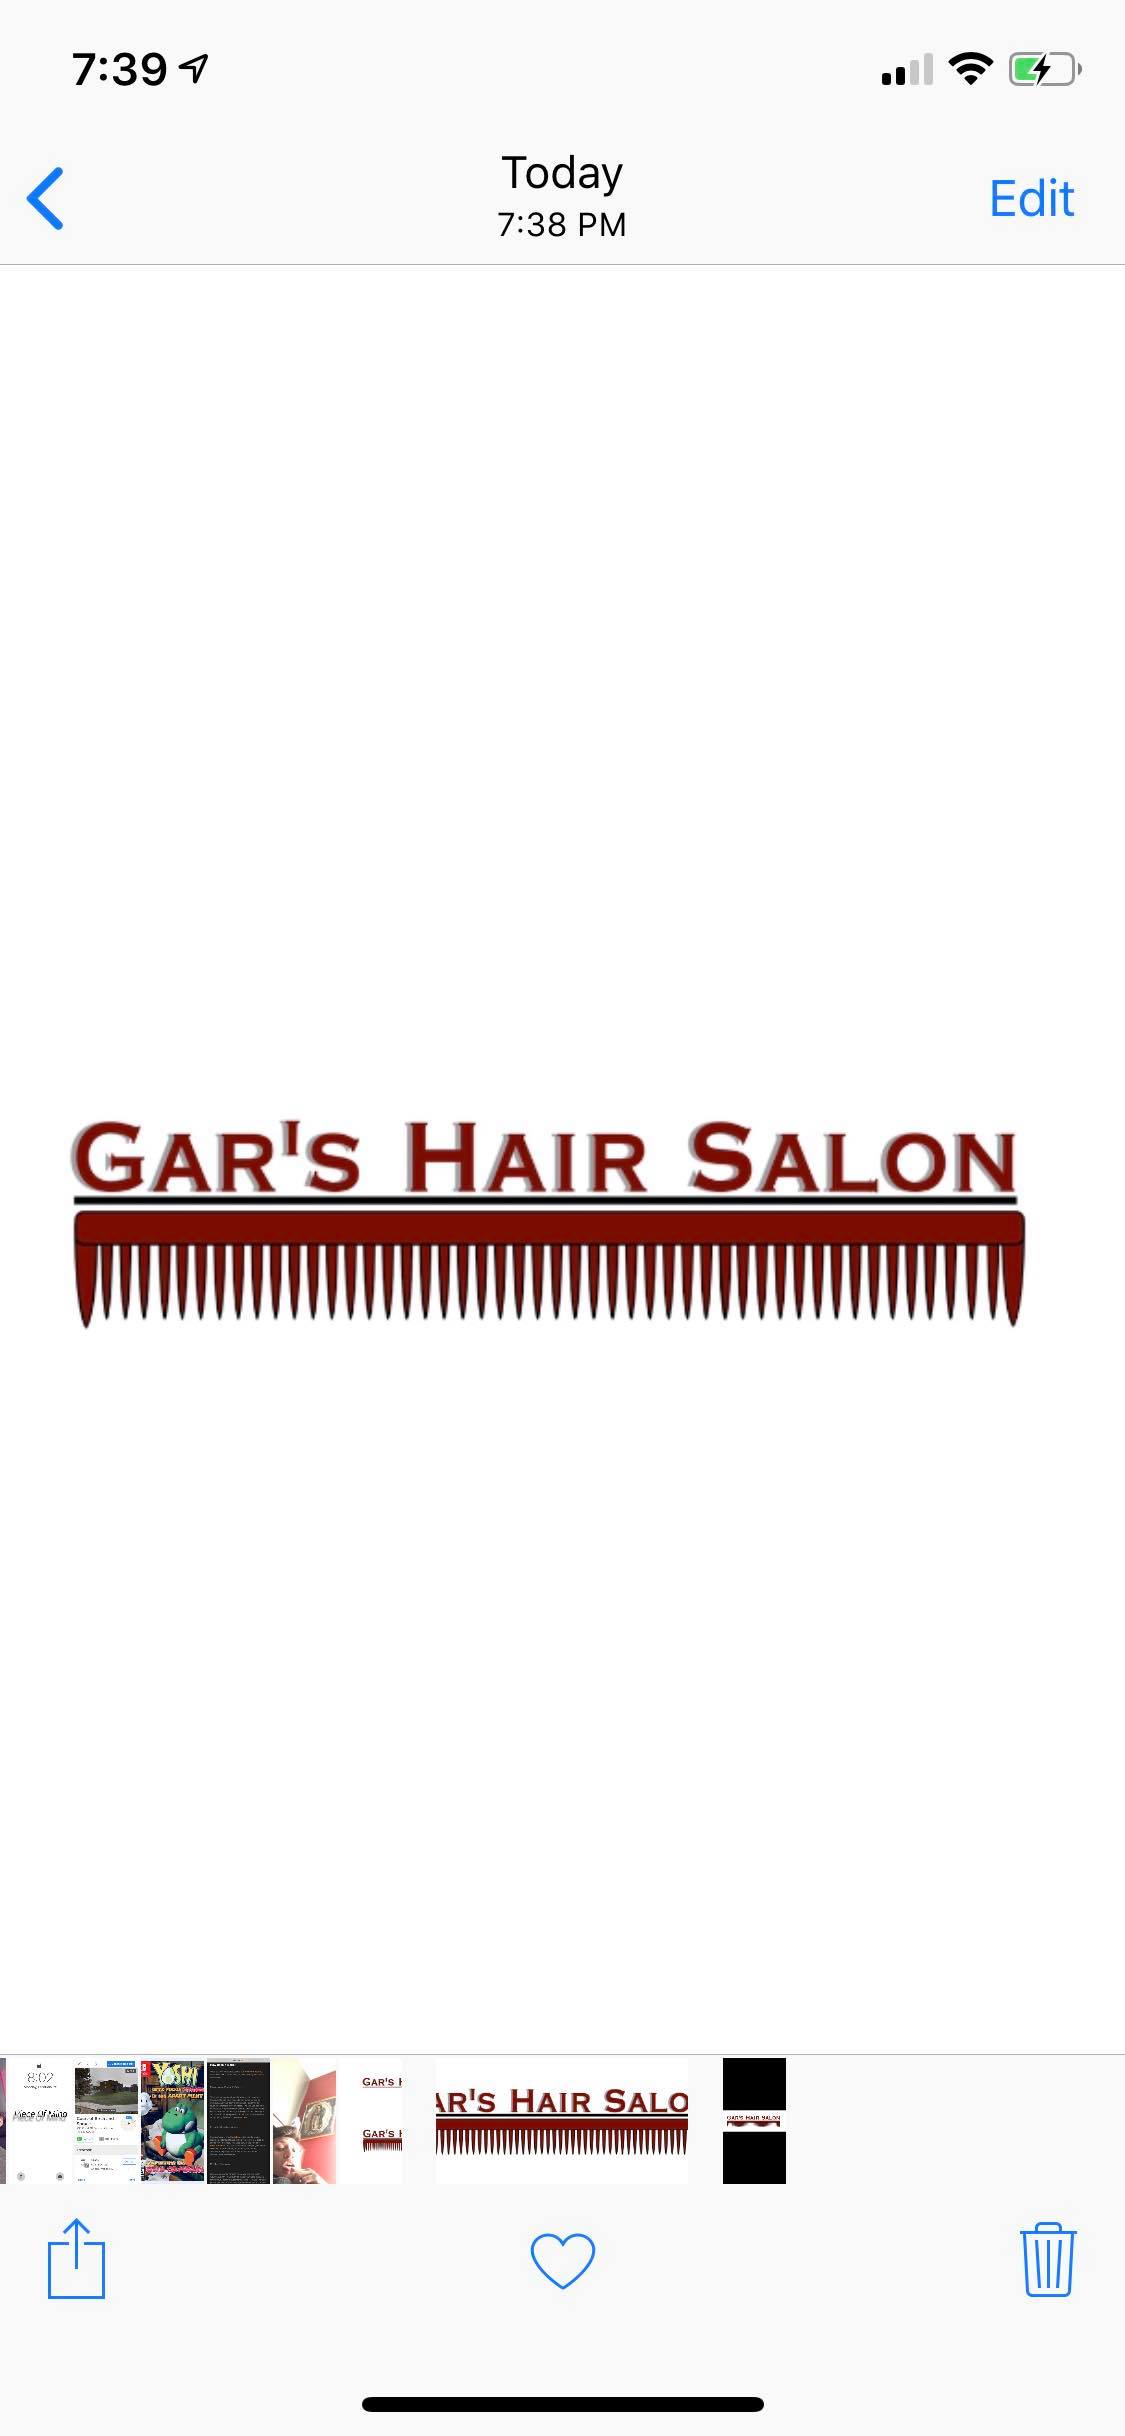 Gars Full Services Salon